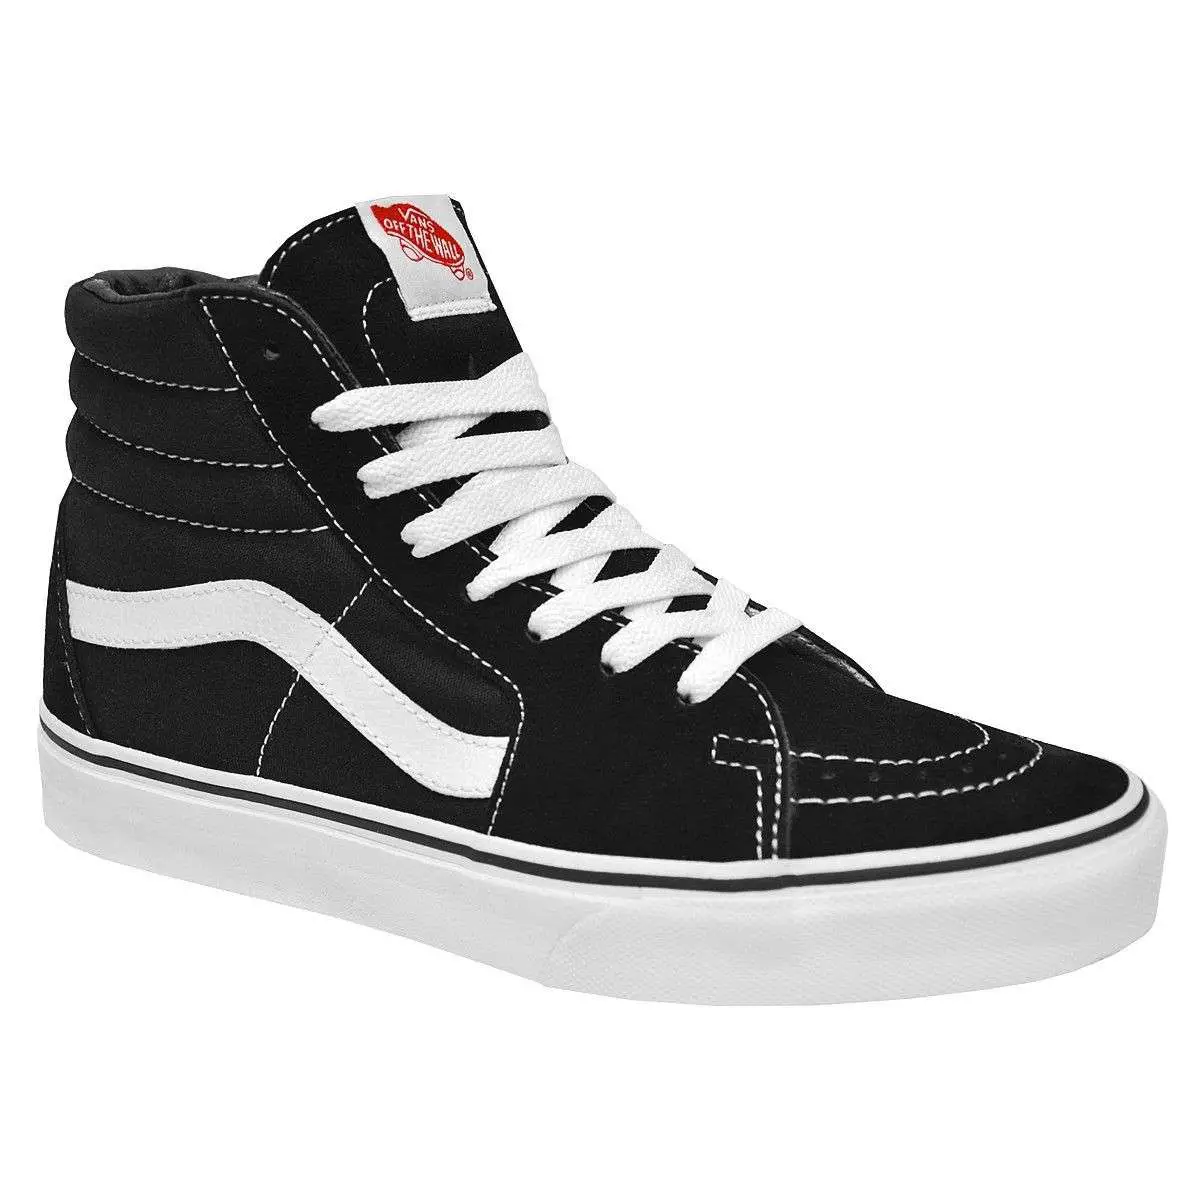 Vans SK8 High Black/White Shoes